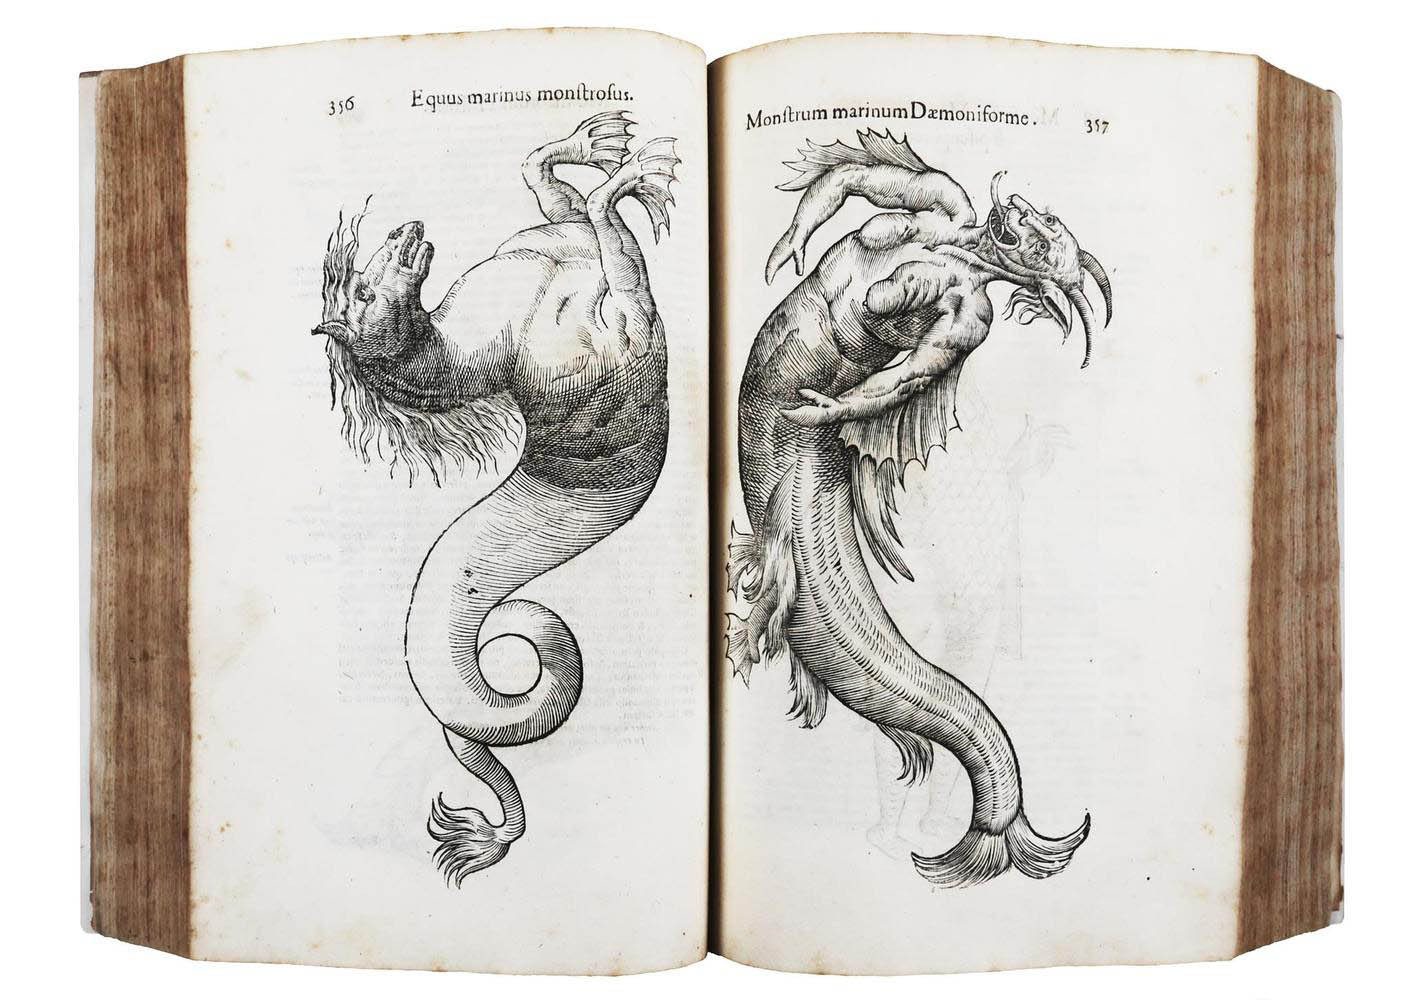 Разворот книги Улисса Альдрованди “Monstrorum historia” (1642). (http://www.philobiblon.org/).